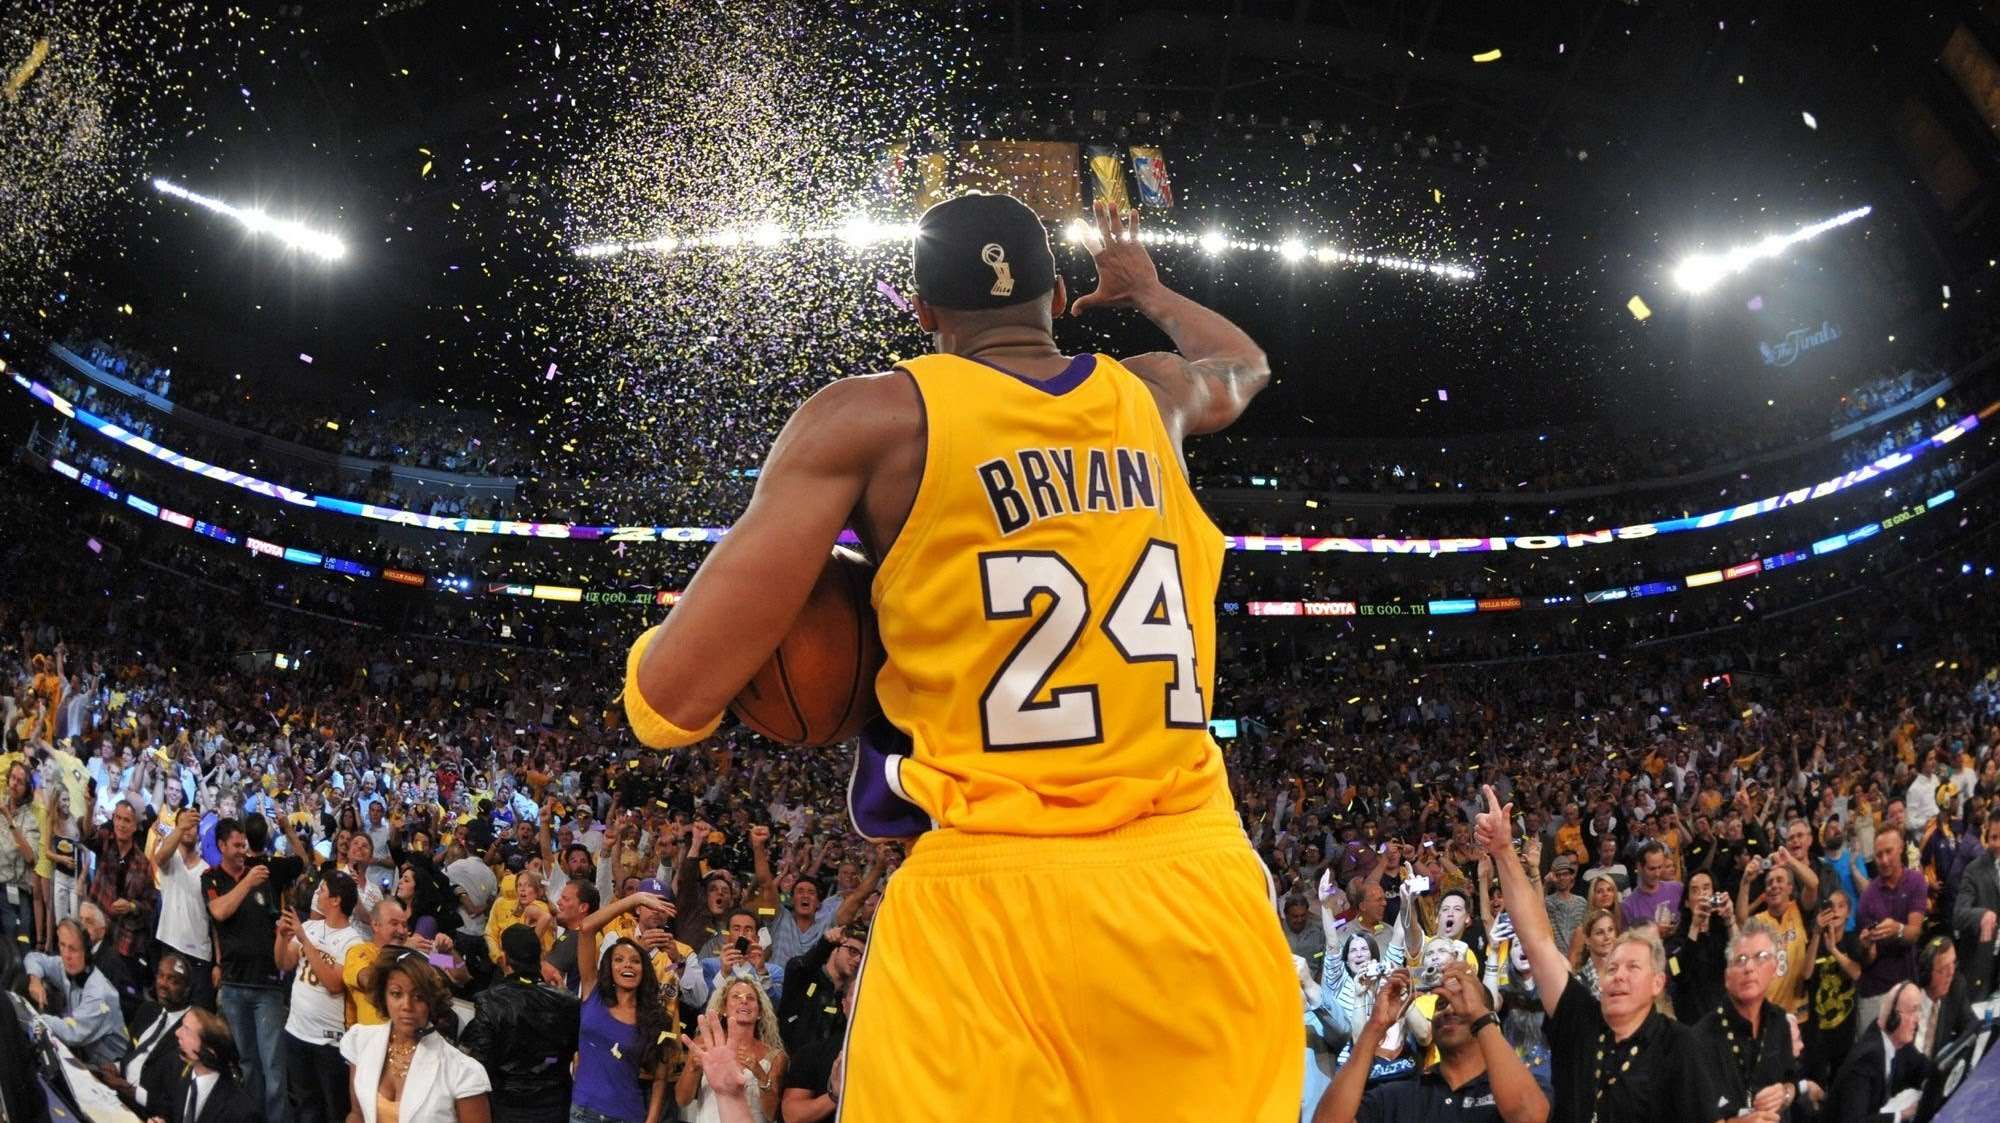 Kobe Bryant celebrates after winning the 2009 NBA championship. - Kobe Bryant